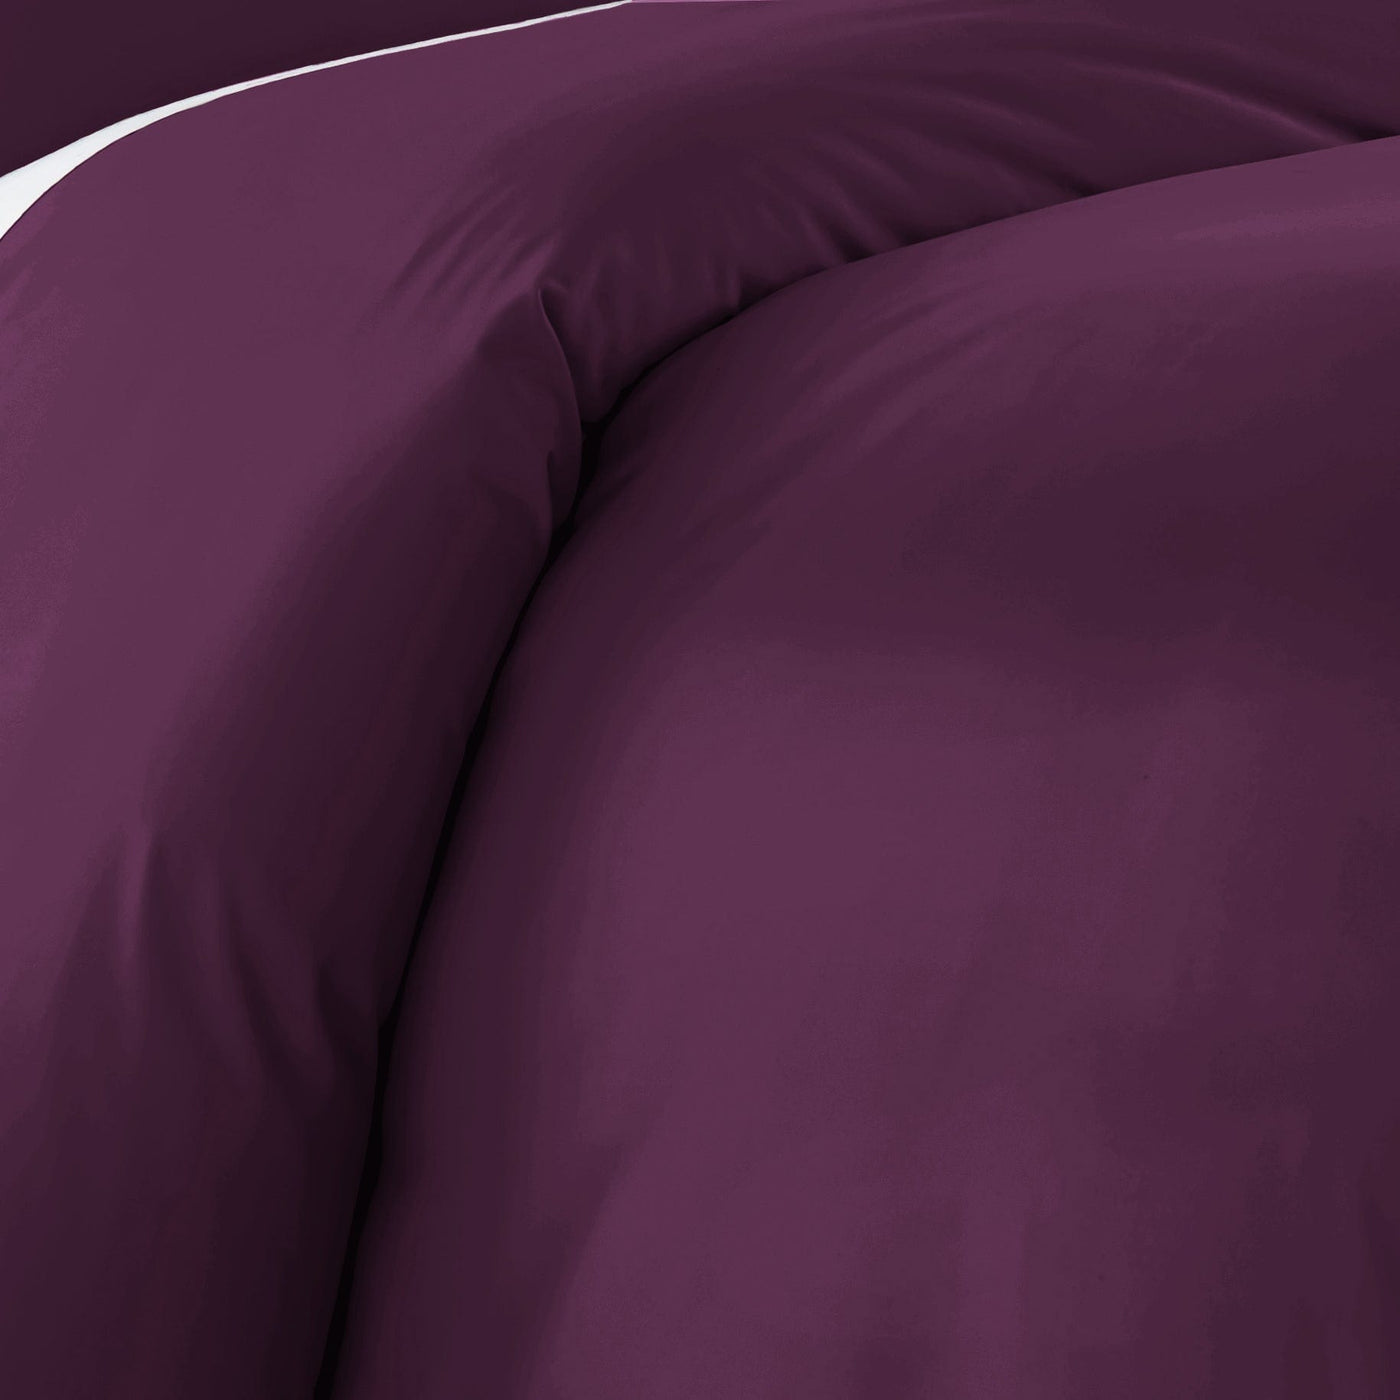 Details of Everyday Essentials Duvet Cover Set in Purple#color_purple